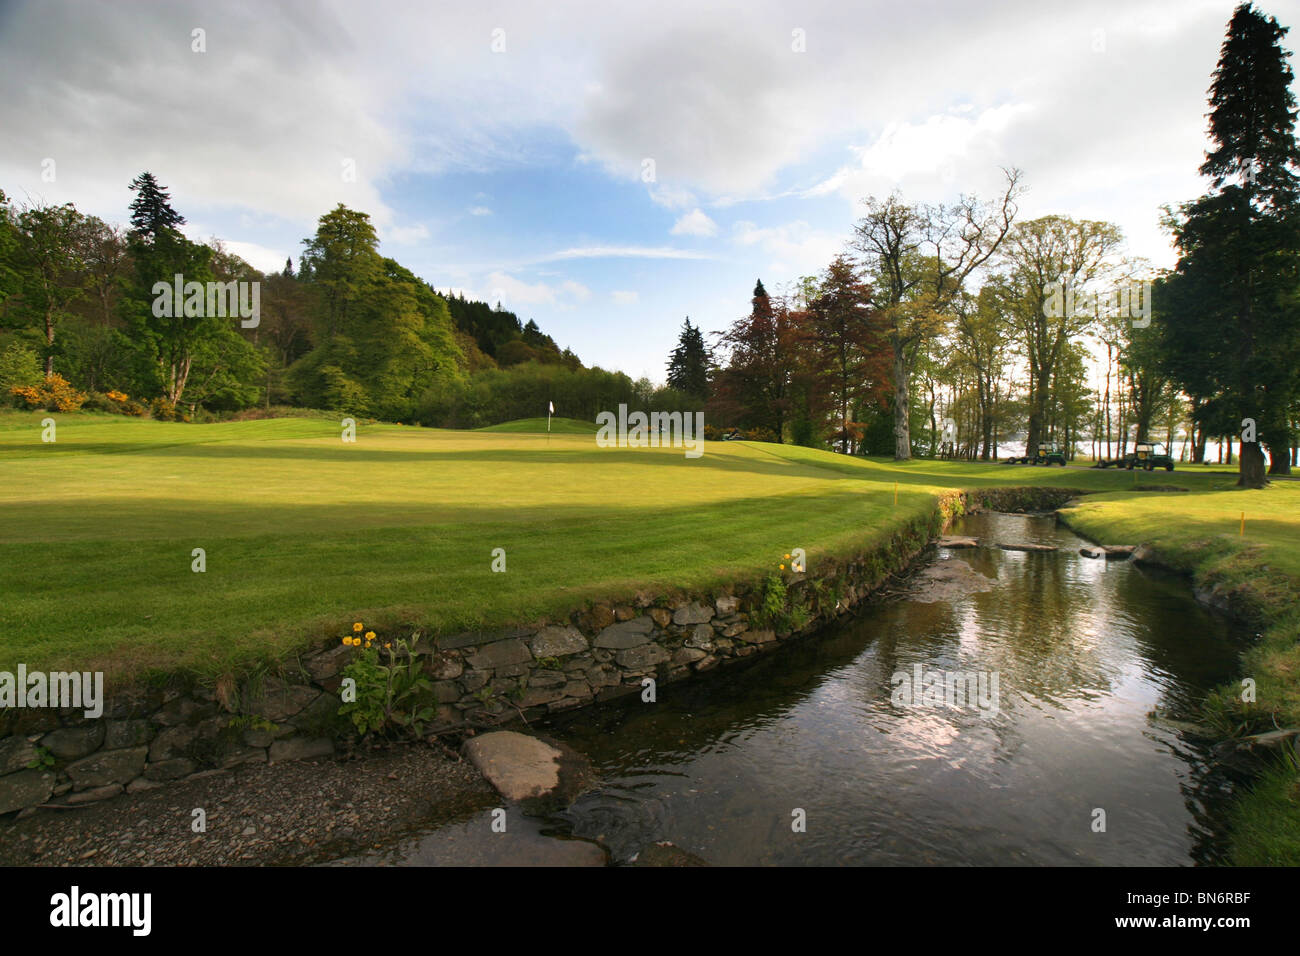 Loch Lomond Golf Course, Glasgow, Scotland. Hole 16 river next to fairway. Stock Photo